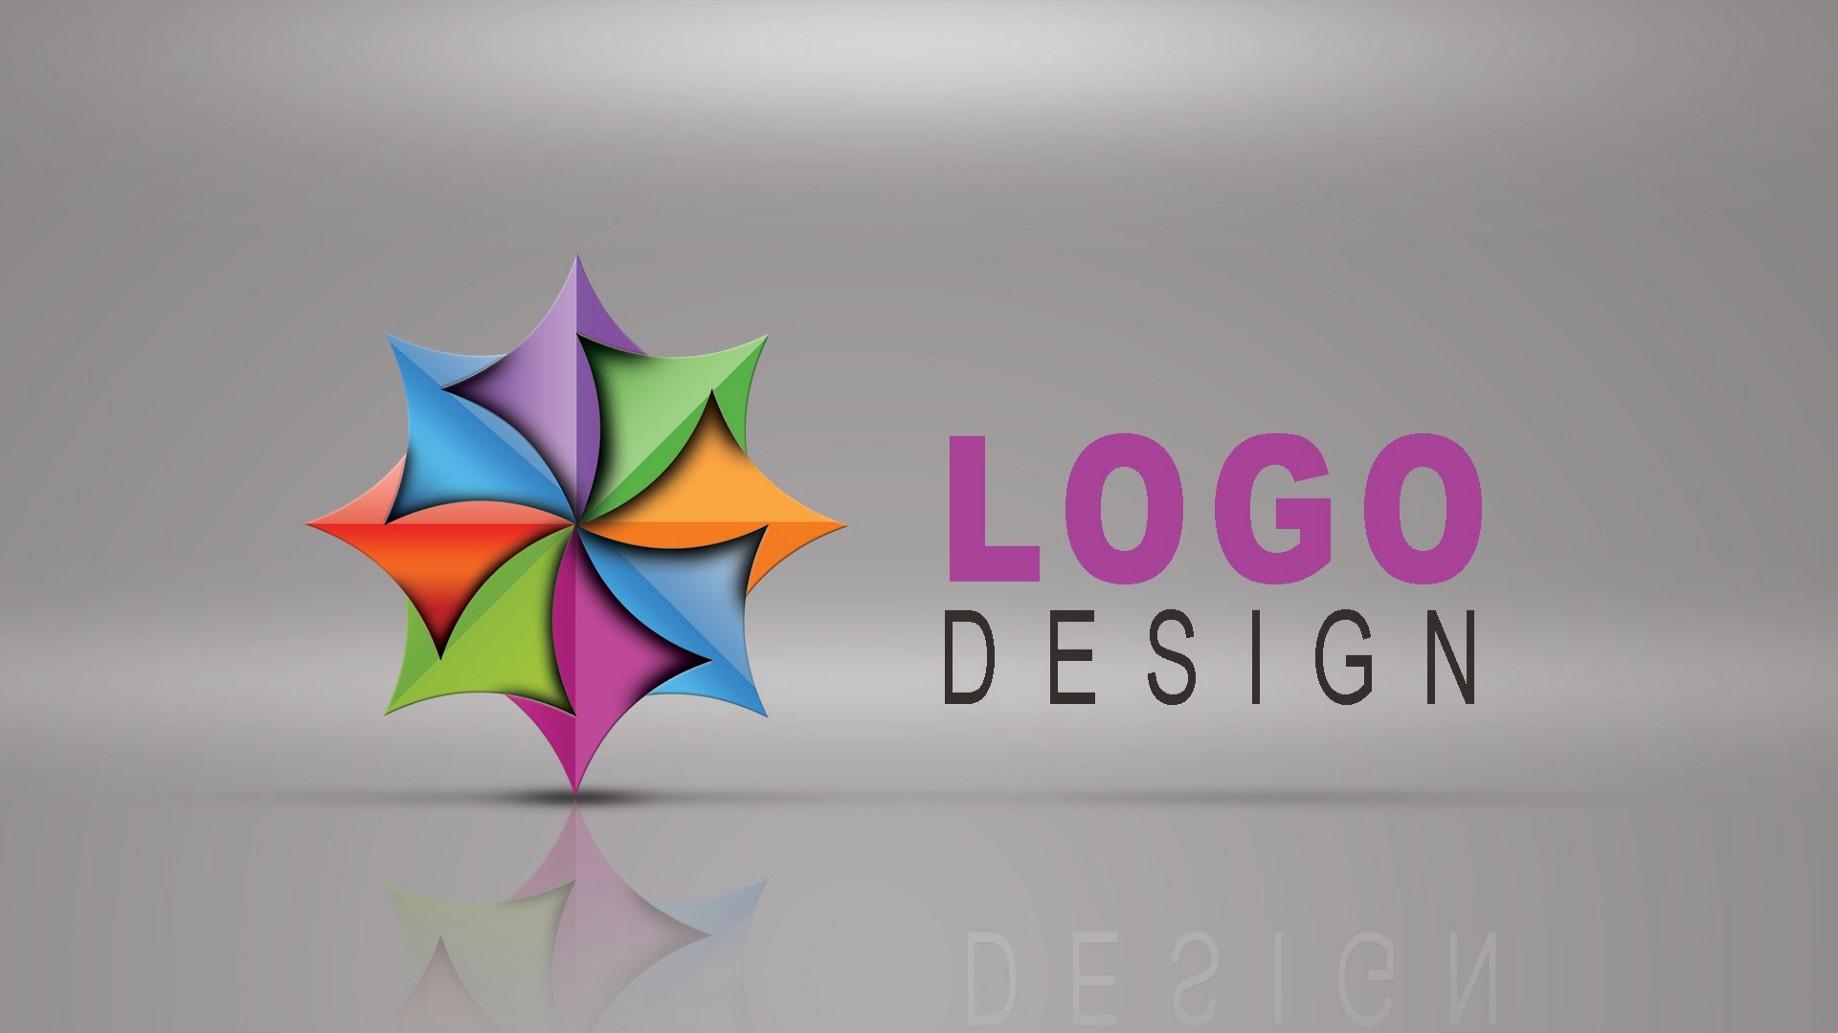 Tutorials Logo - Top Online Tutorials to Learn Logo Design - Quick Design - Medium